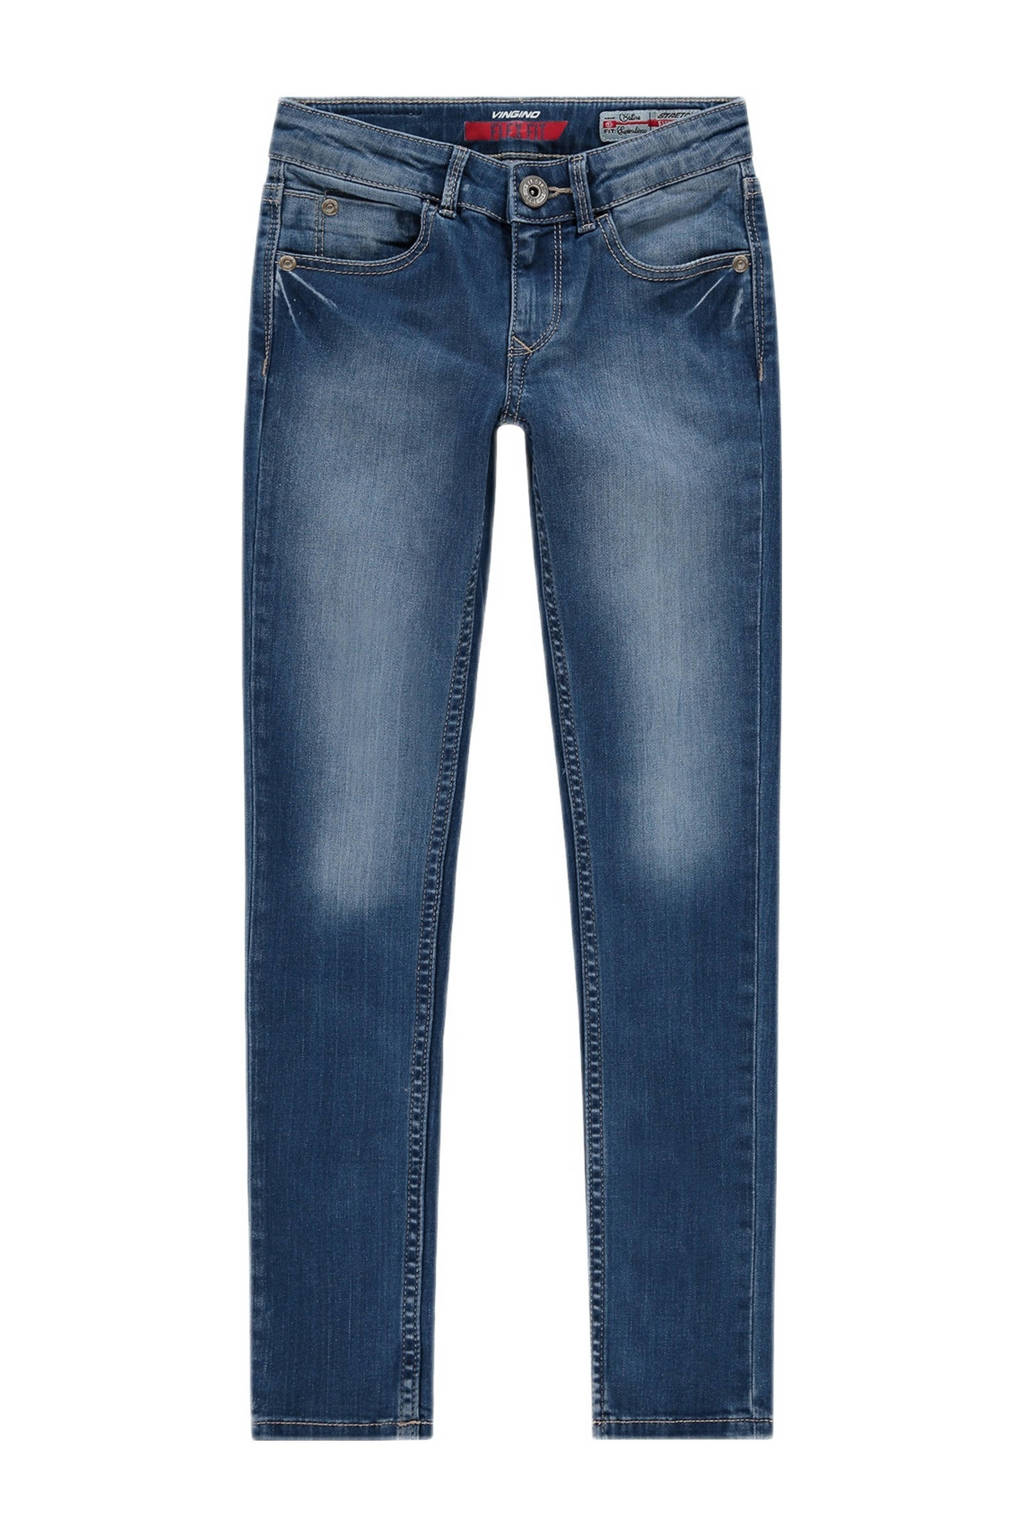 Vingino super skinny jeans Bettine blue vintage